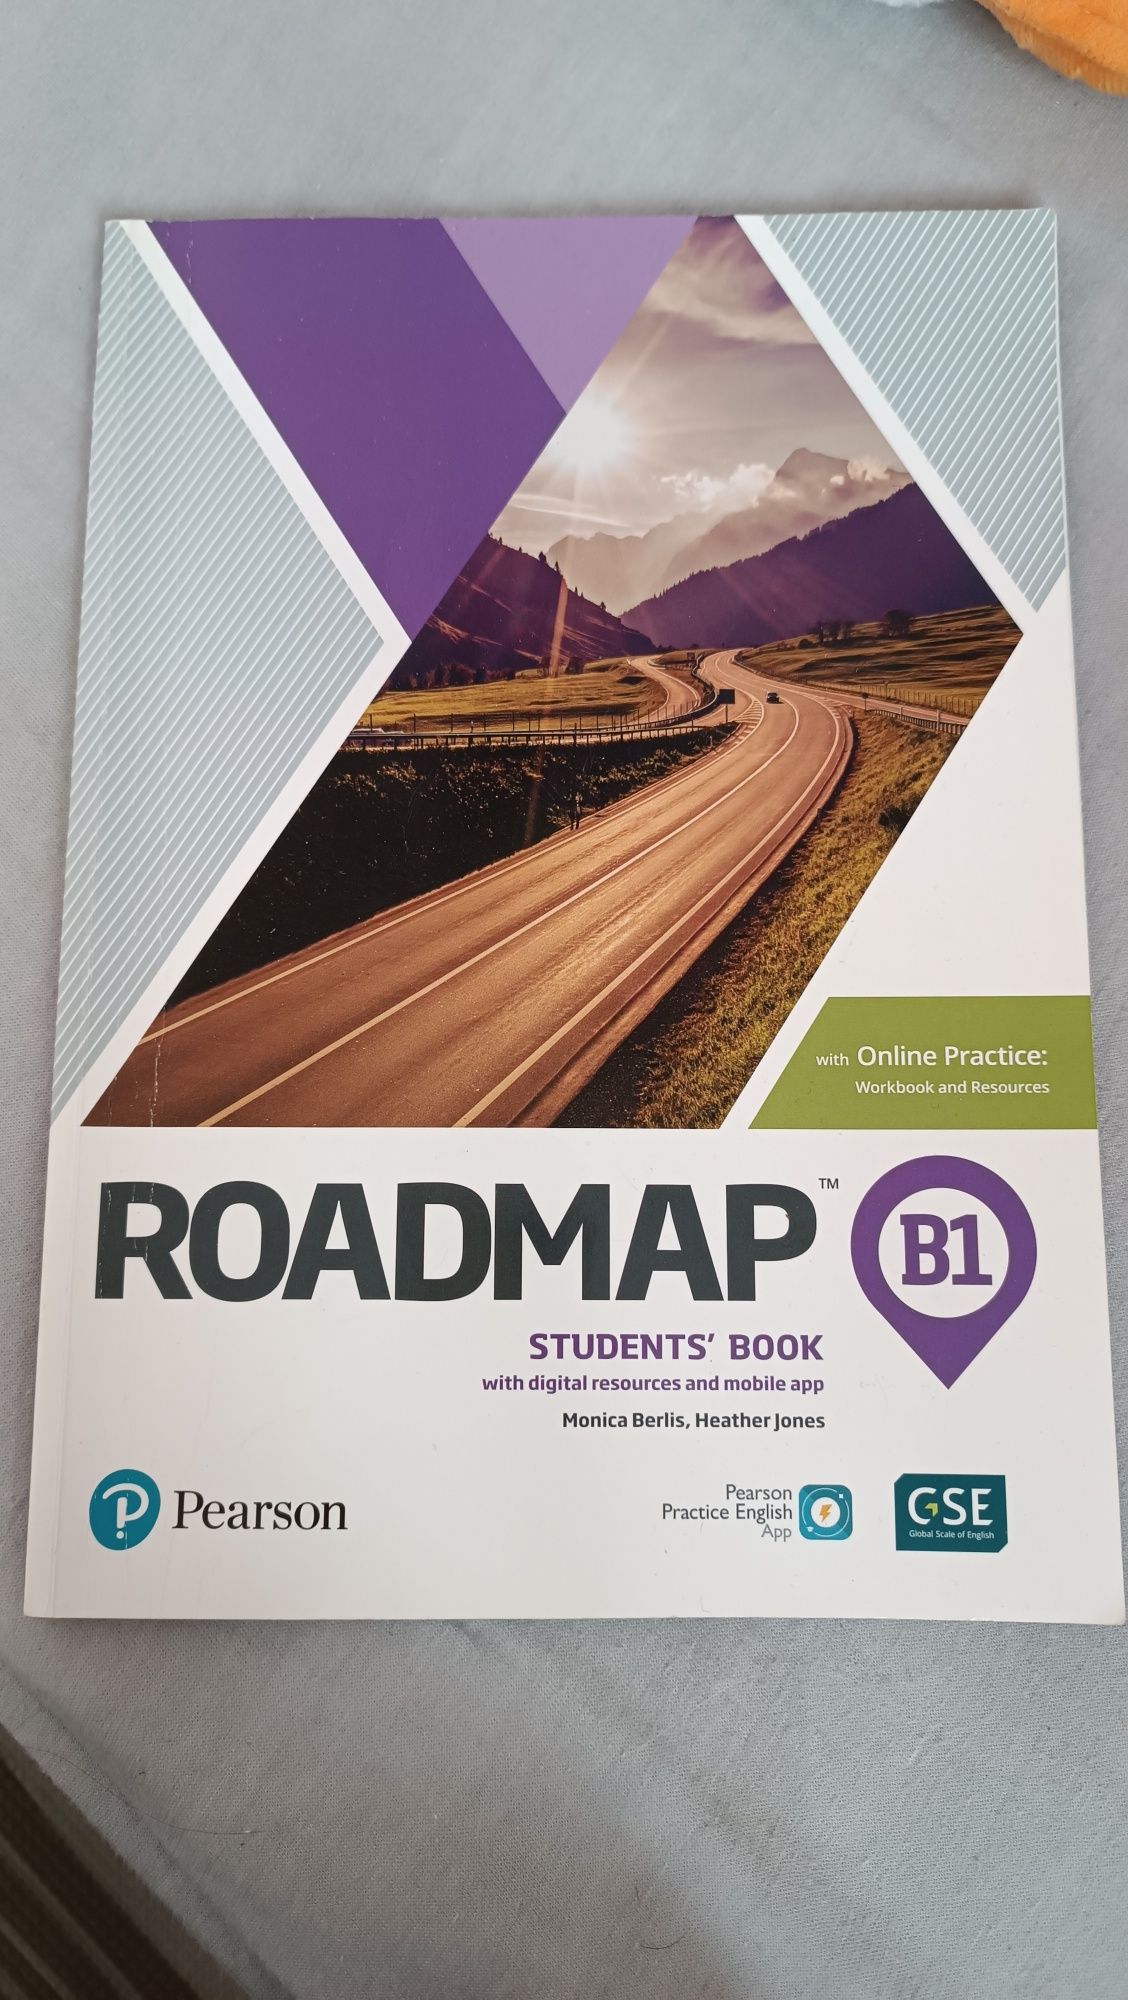 Roadmap B1 stydent's book